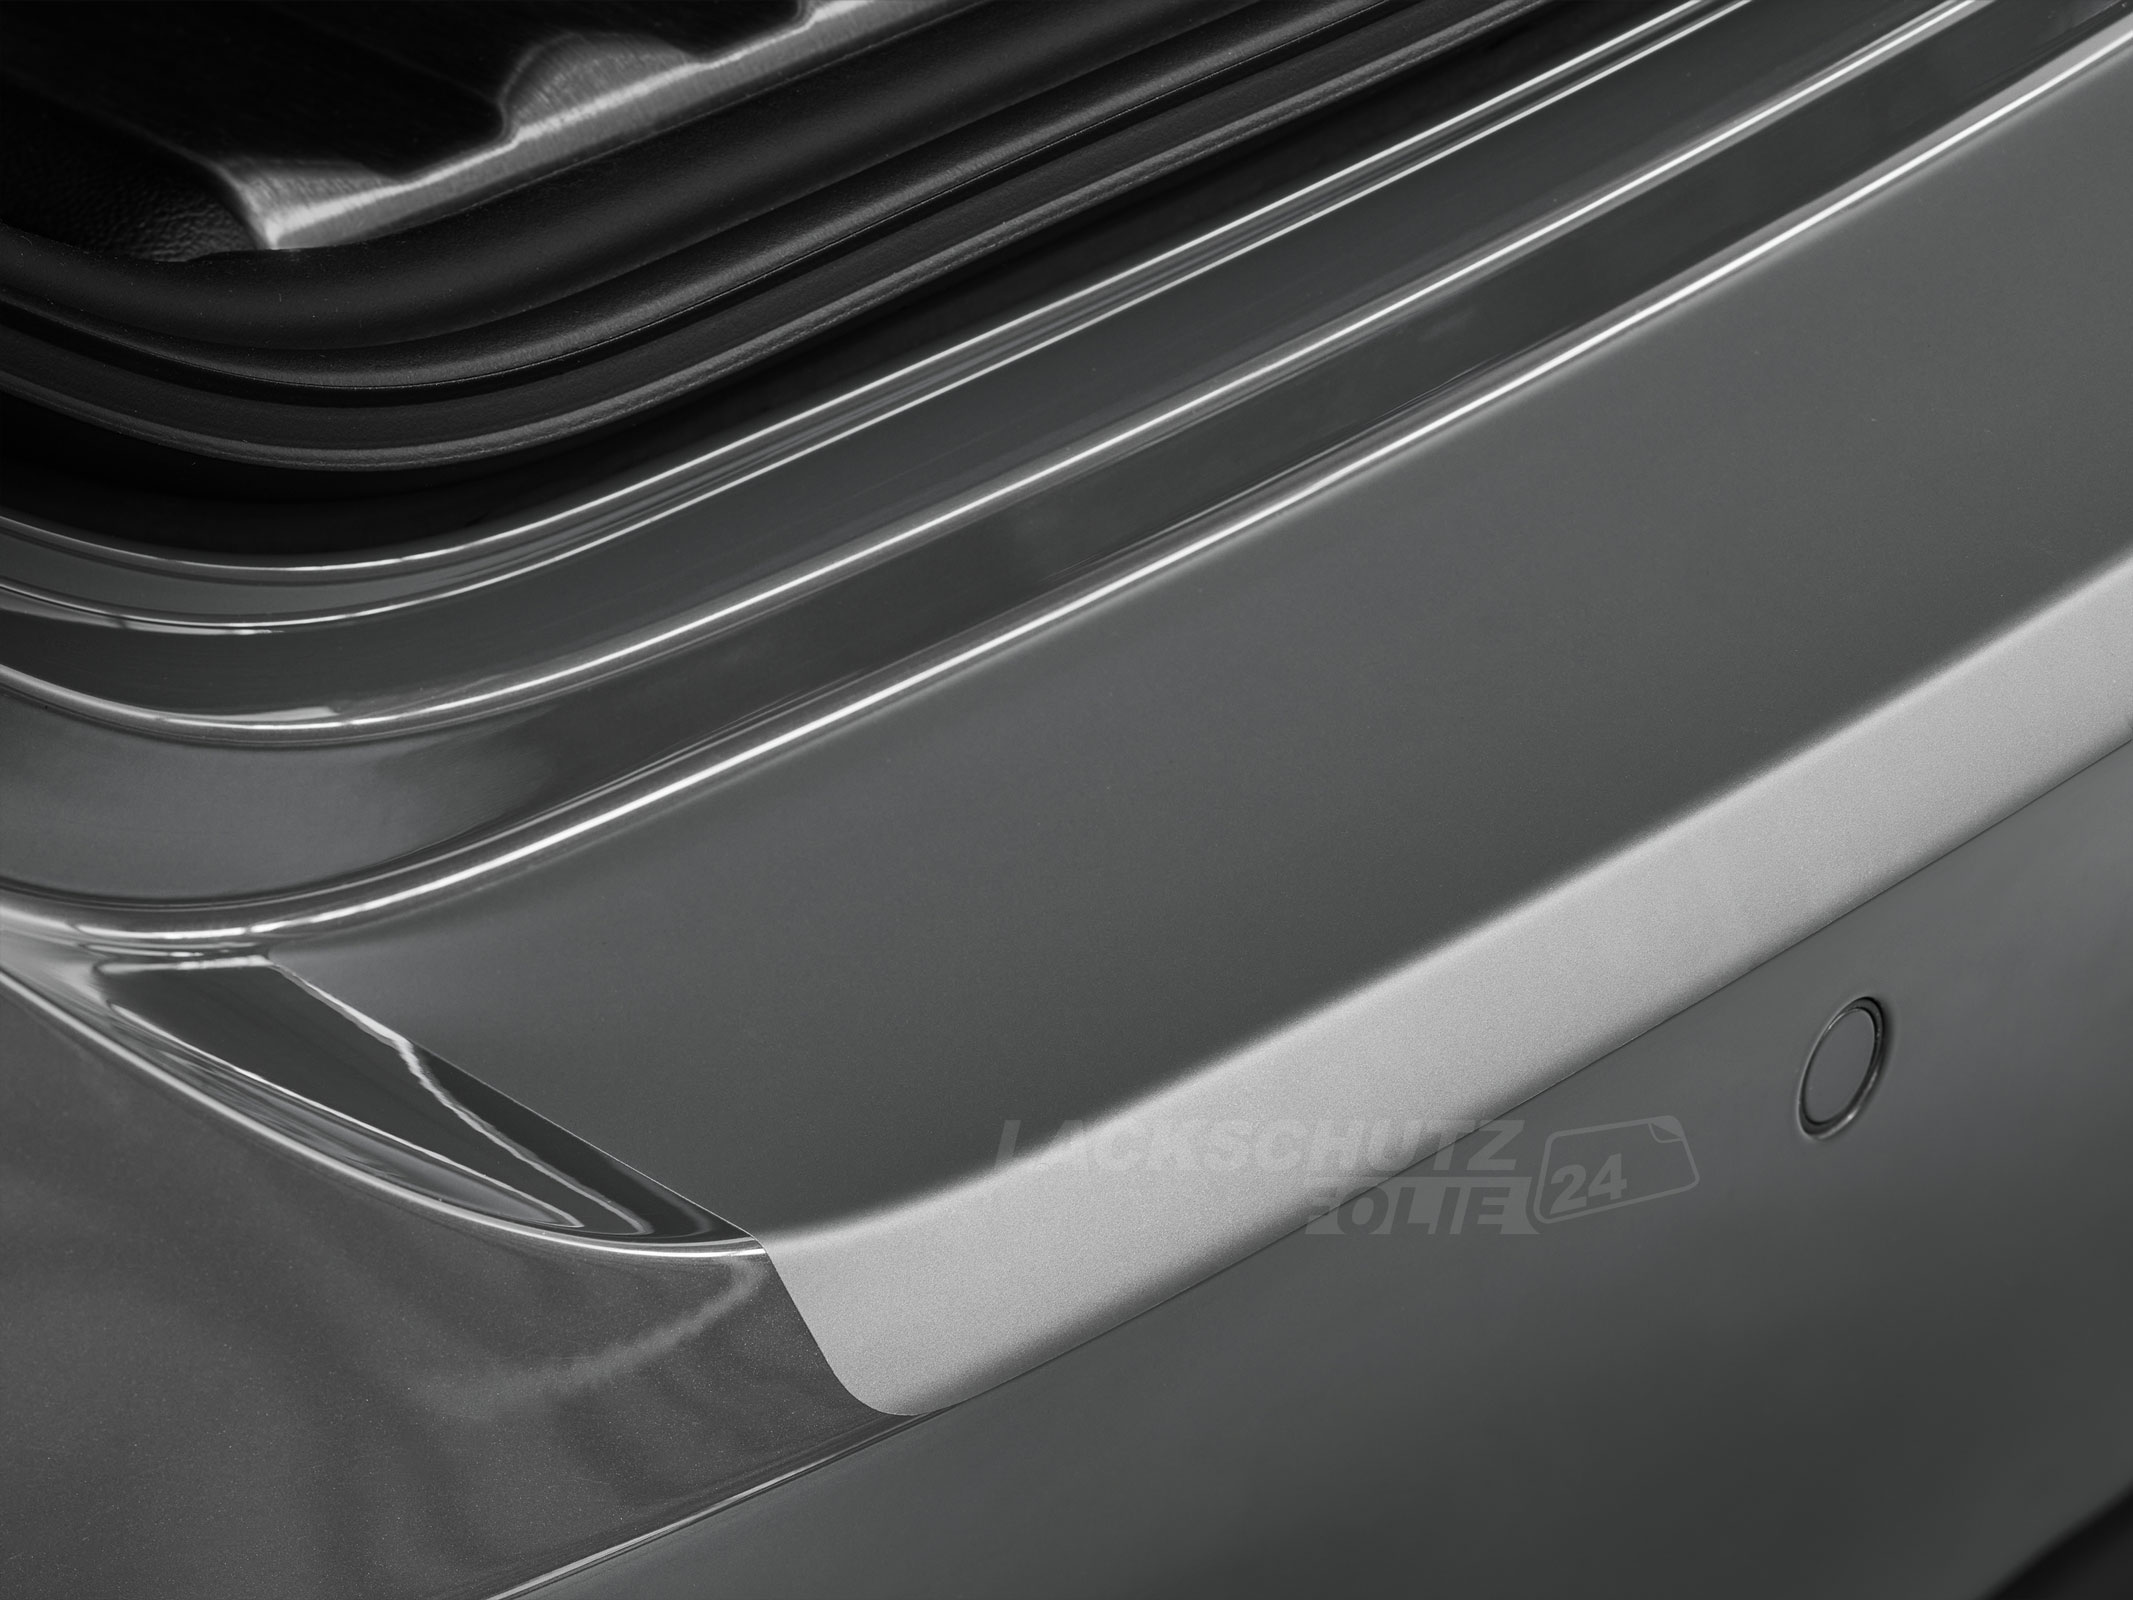 Ladekantenschutzfolie - Transparent Glatt MATT 110 µm stark  für BMW Z4 Typ E89 Coupe, BJ 2009-2013